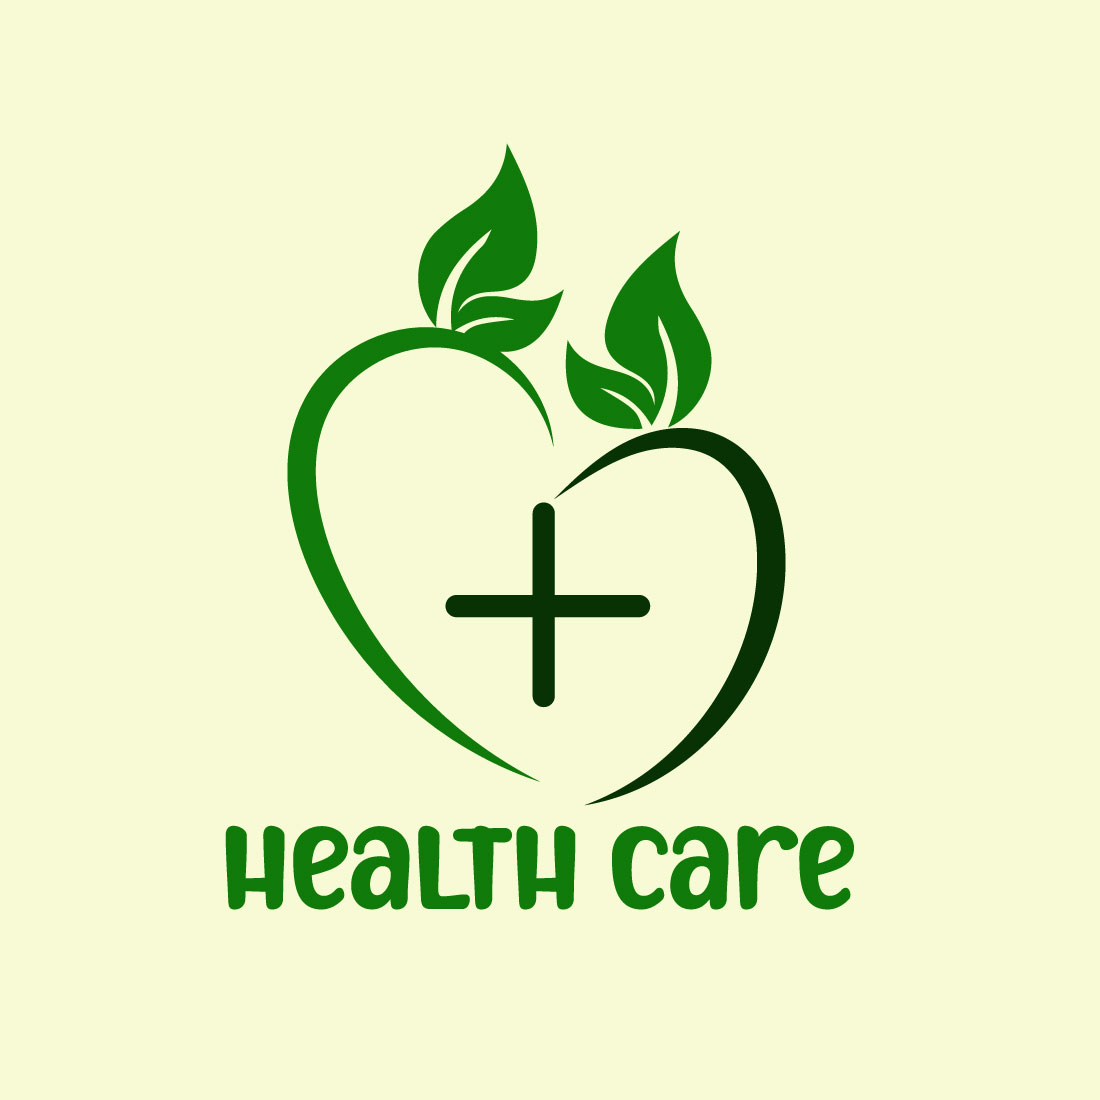 Free Medical Association logo cover image.